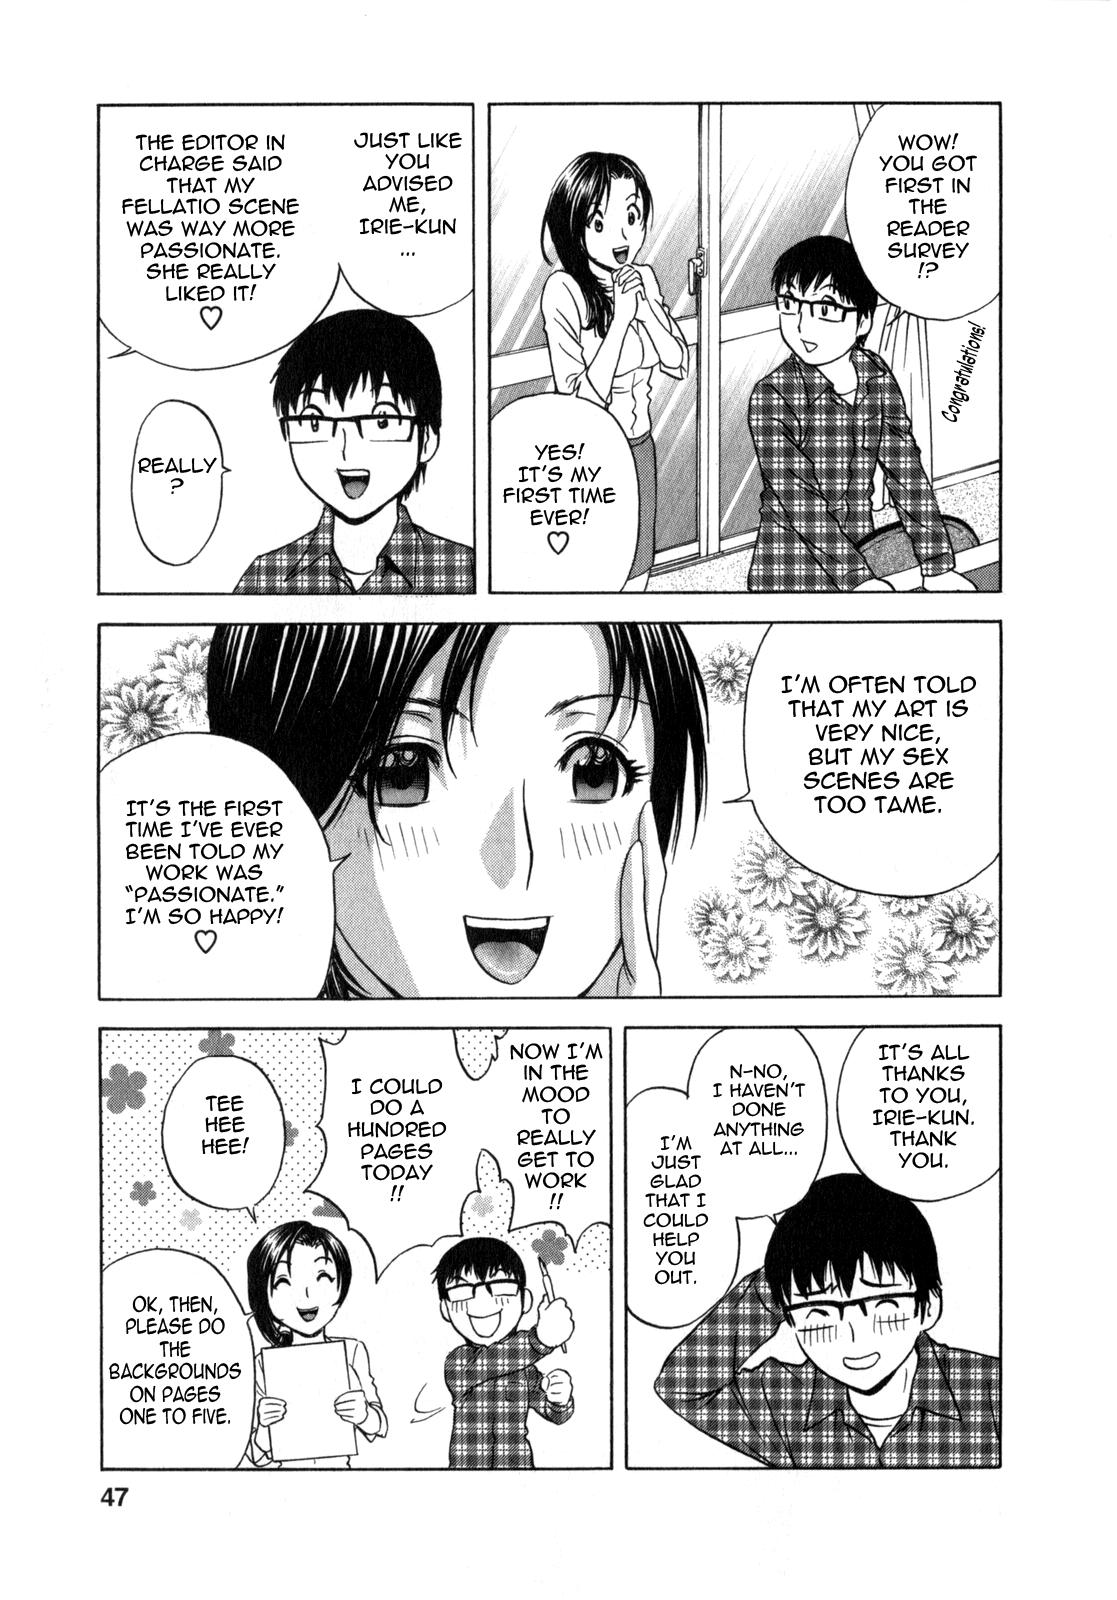 [Hidemaru] Life with Married Women Just Like a Manga 1 - Ch. 1-7 [English] {Tadanohito} 49